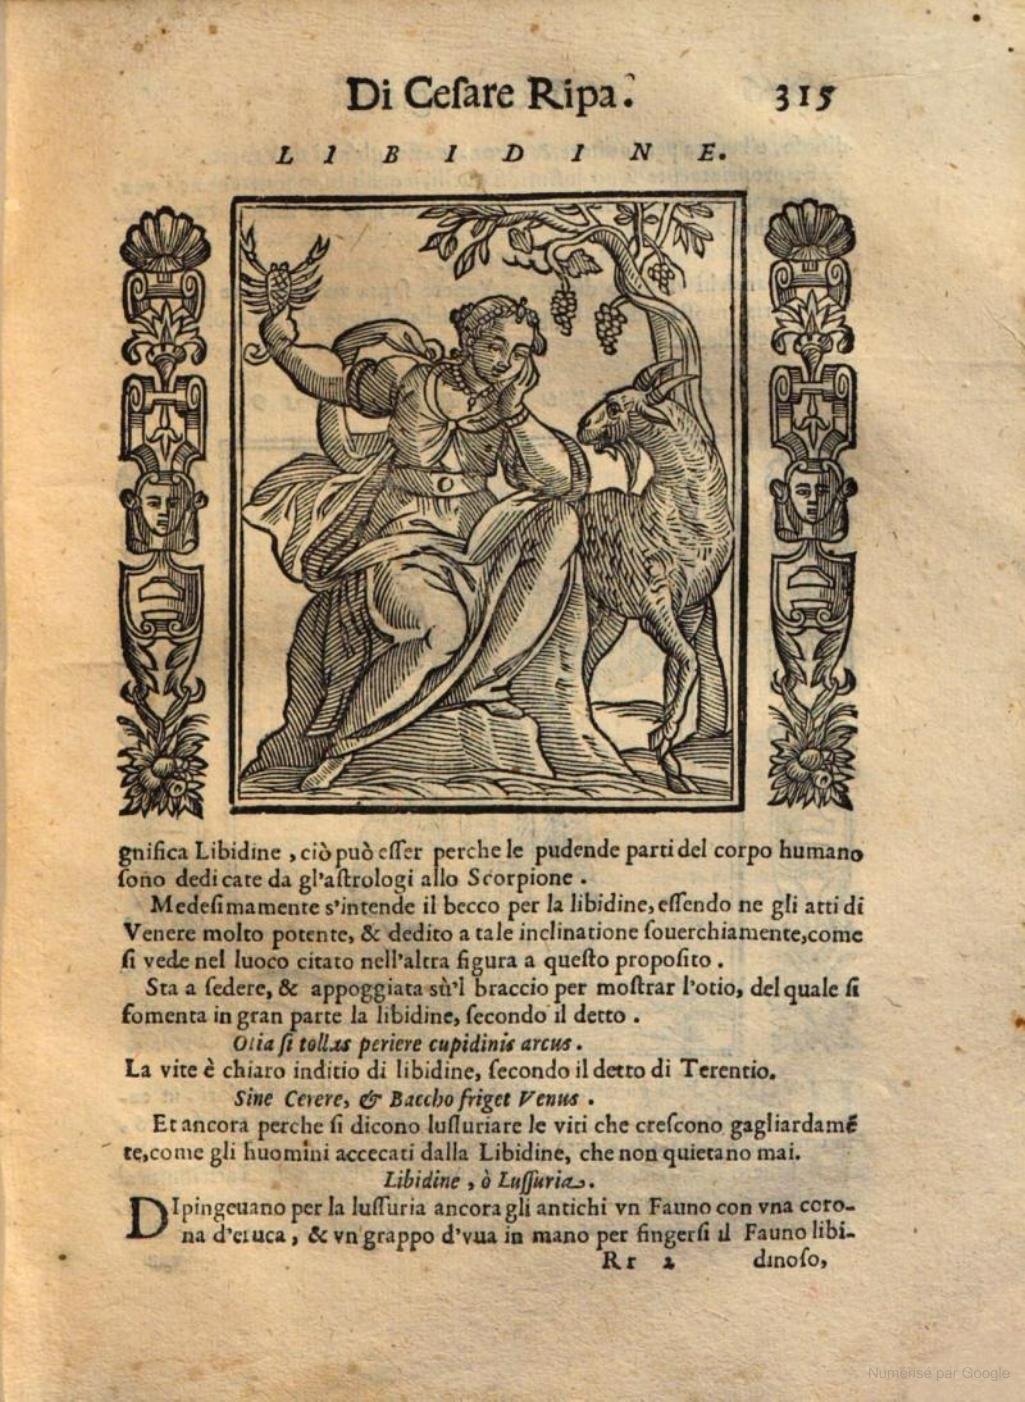 Ripa 1611 Libidine Iconologia ed Pietro Paolo Tozzi